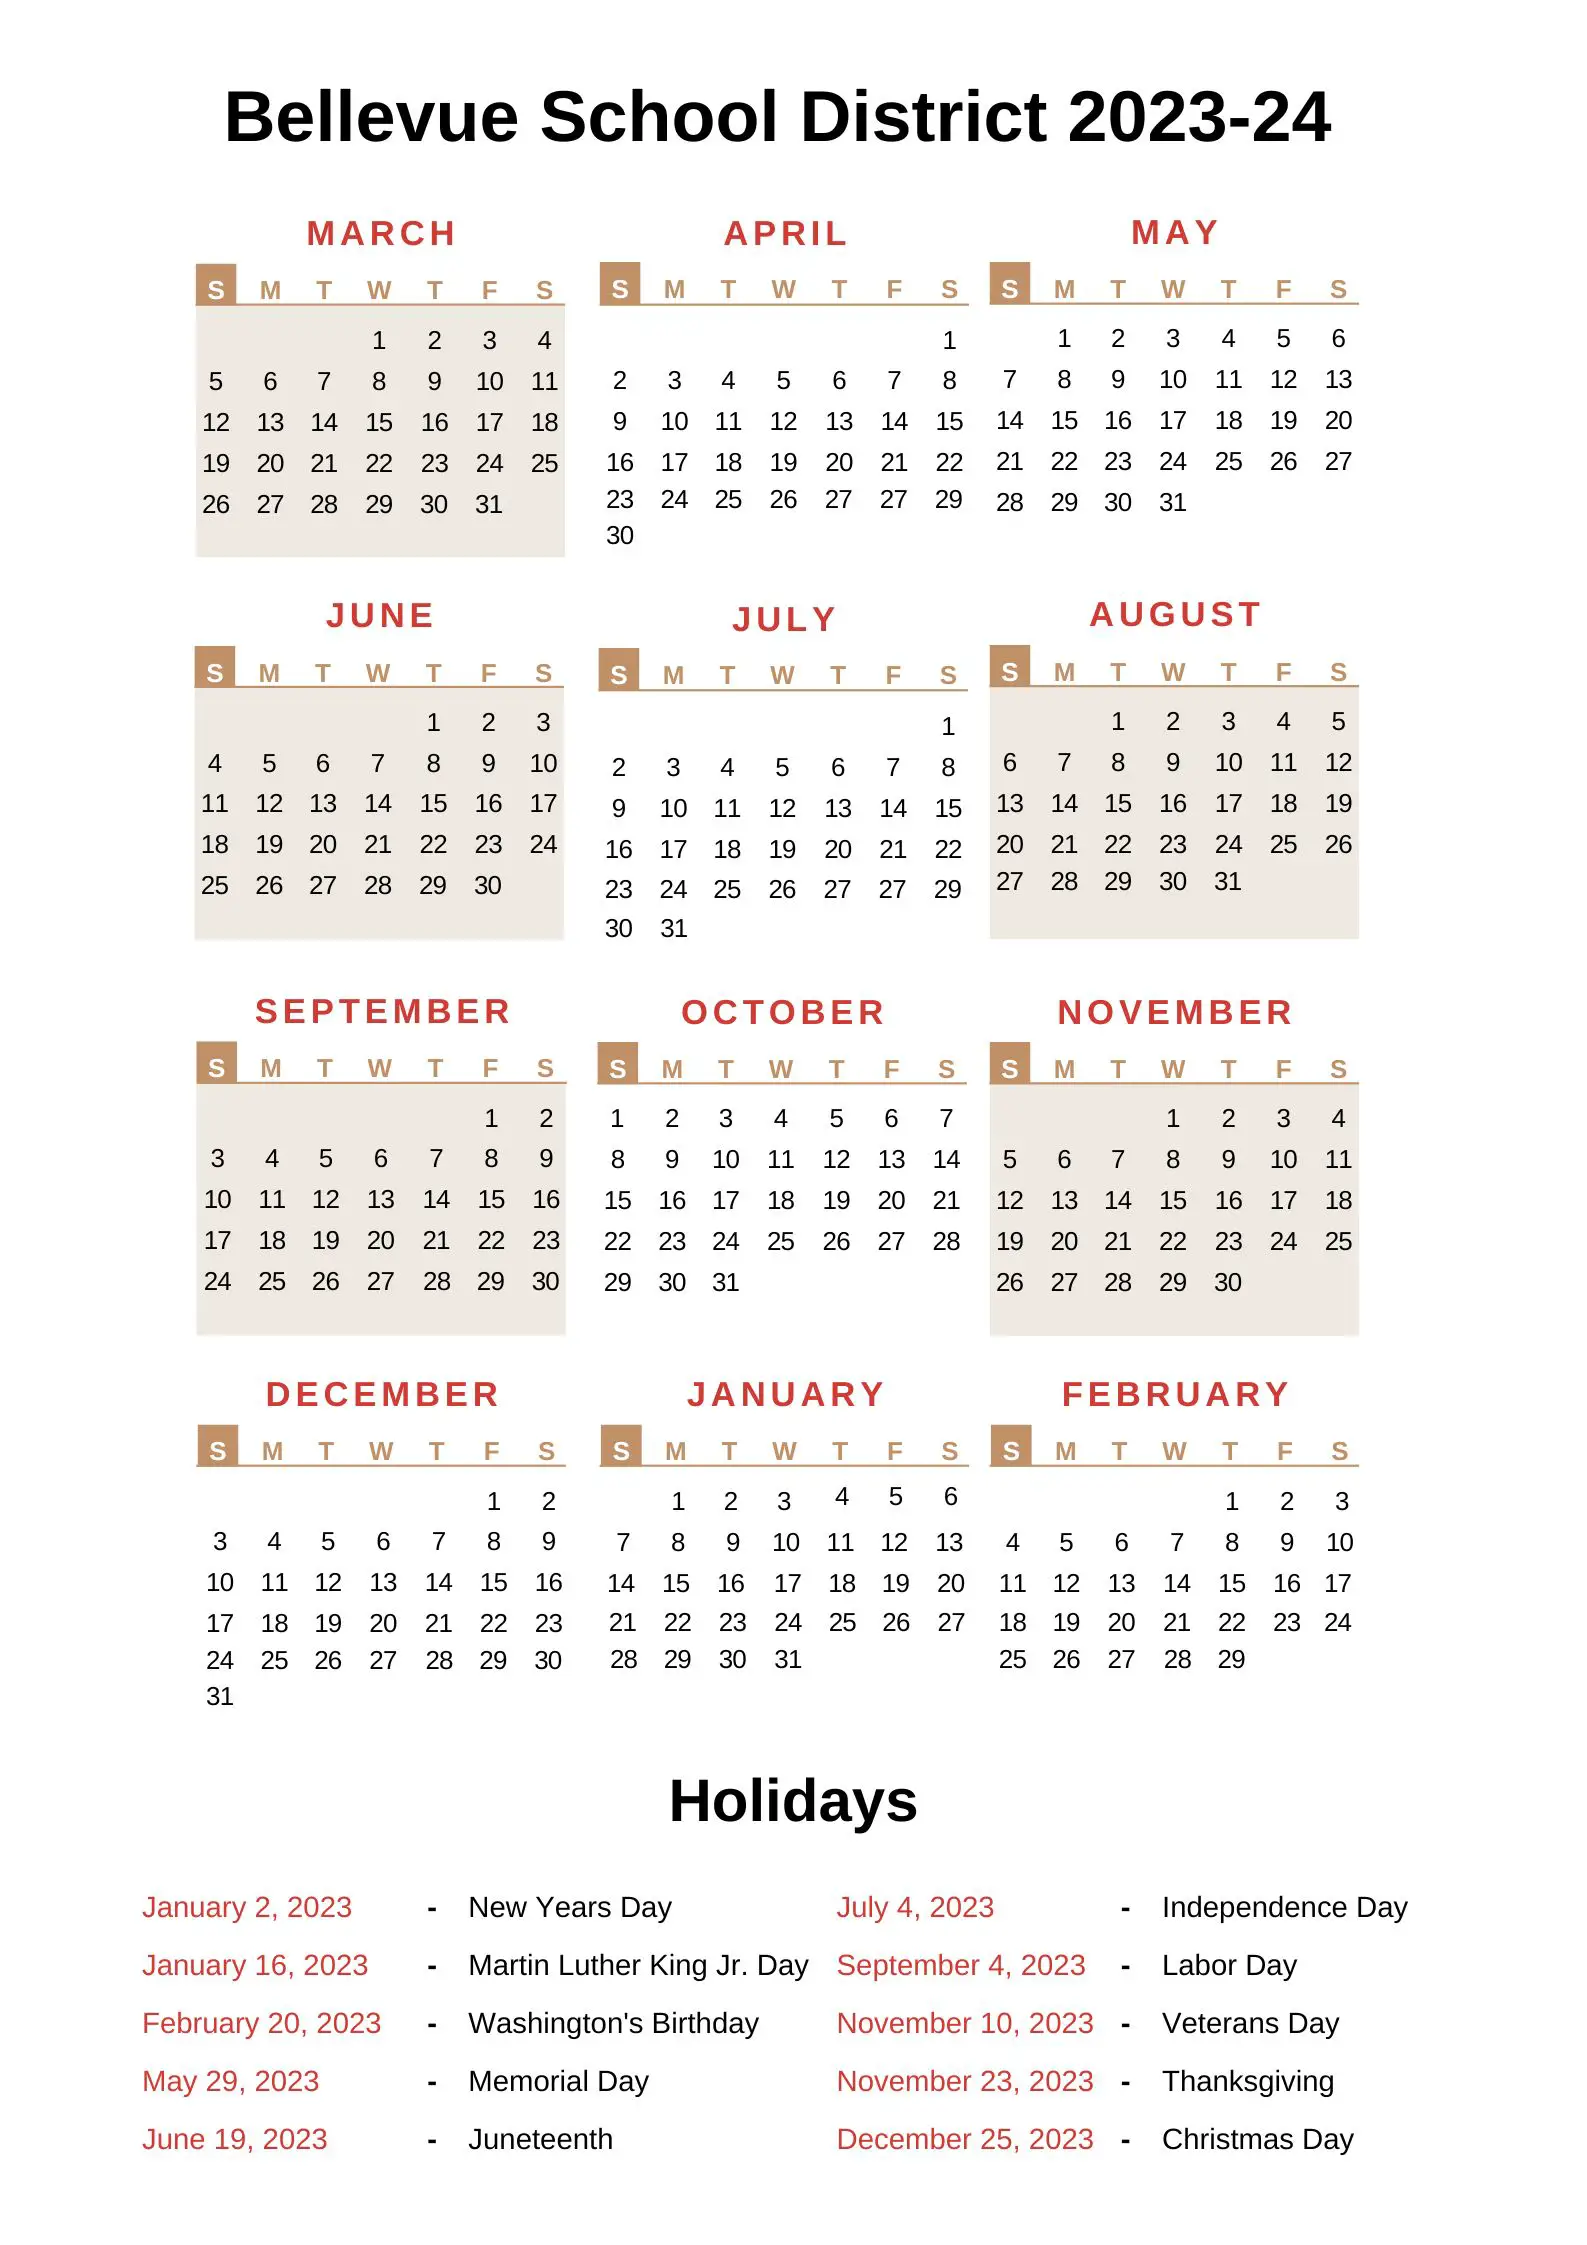 Bellevue School District Calendar 202324 with Holidays